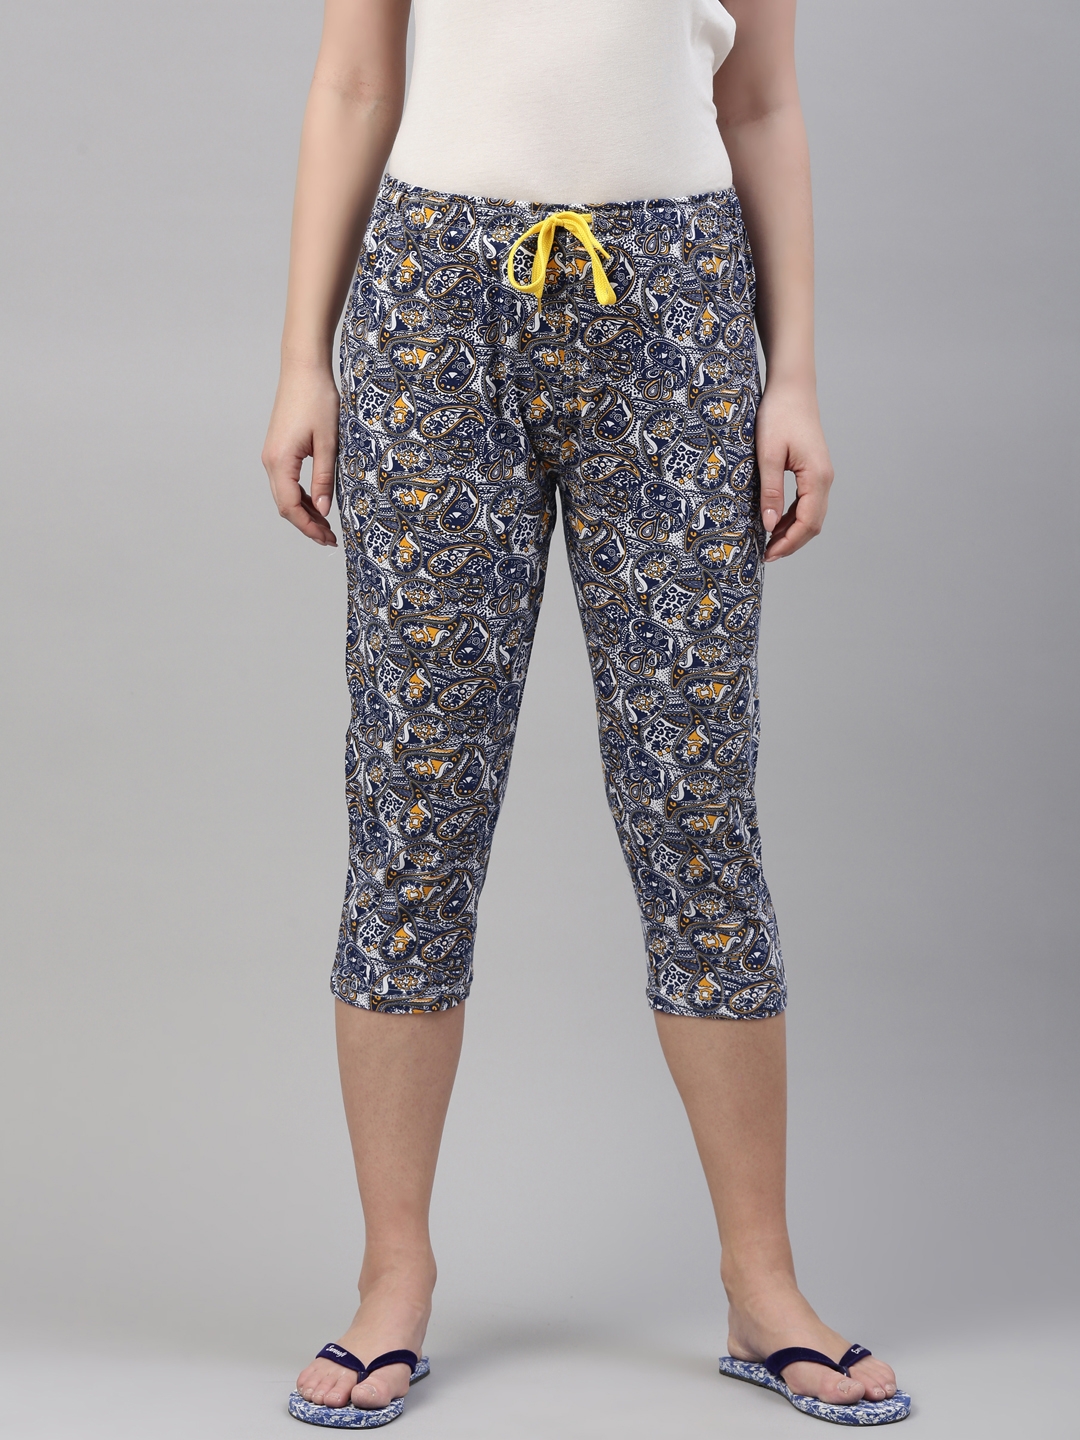 Cotton Capris For Women - Half Pants Pack Of 2 (purple & Navy Blue), Capri  Shorts, Ladies Capri, महिला कापरी - Tanya Enterprises, Ludhiana | ID:  2852605569633